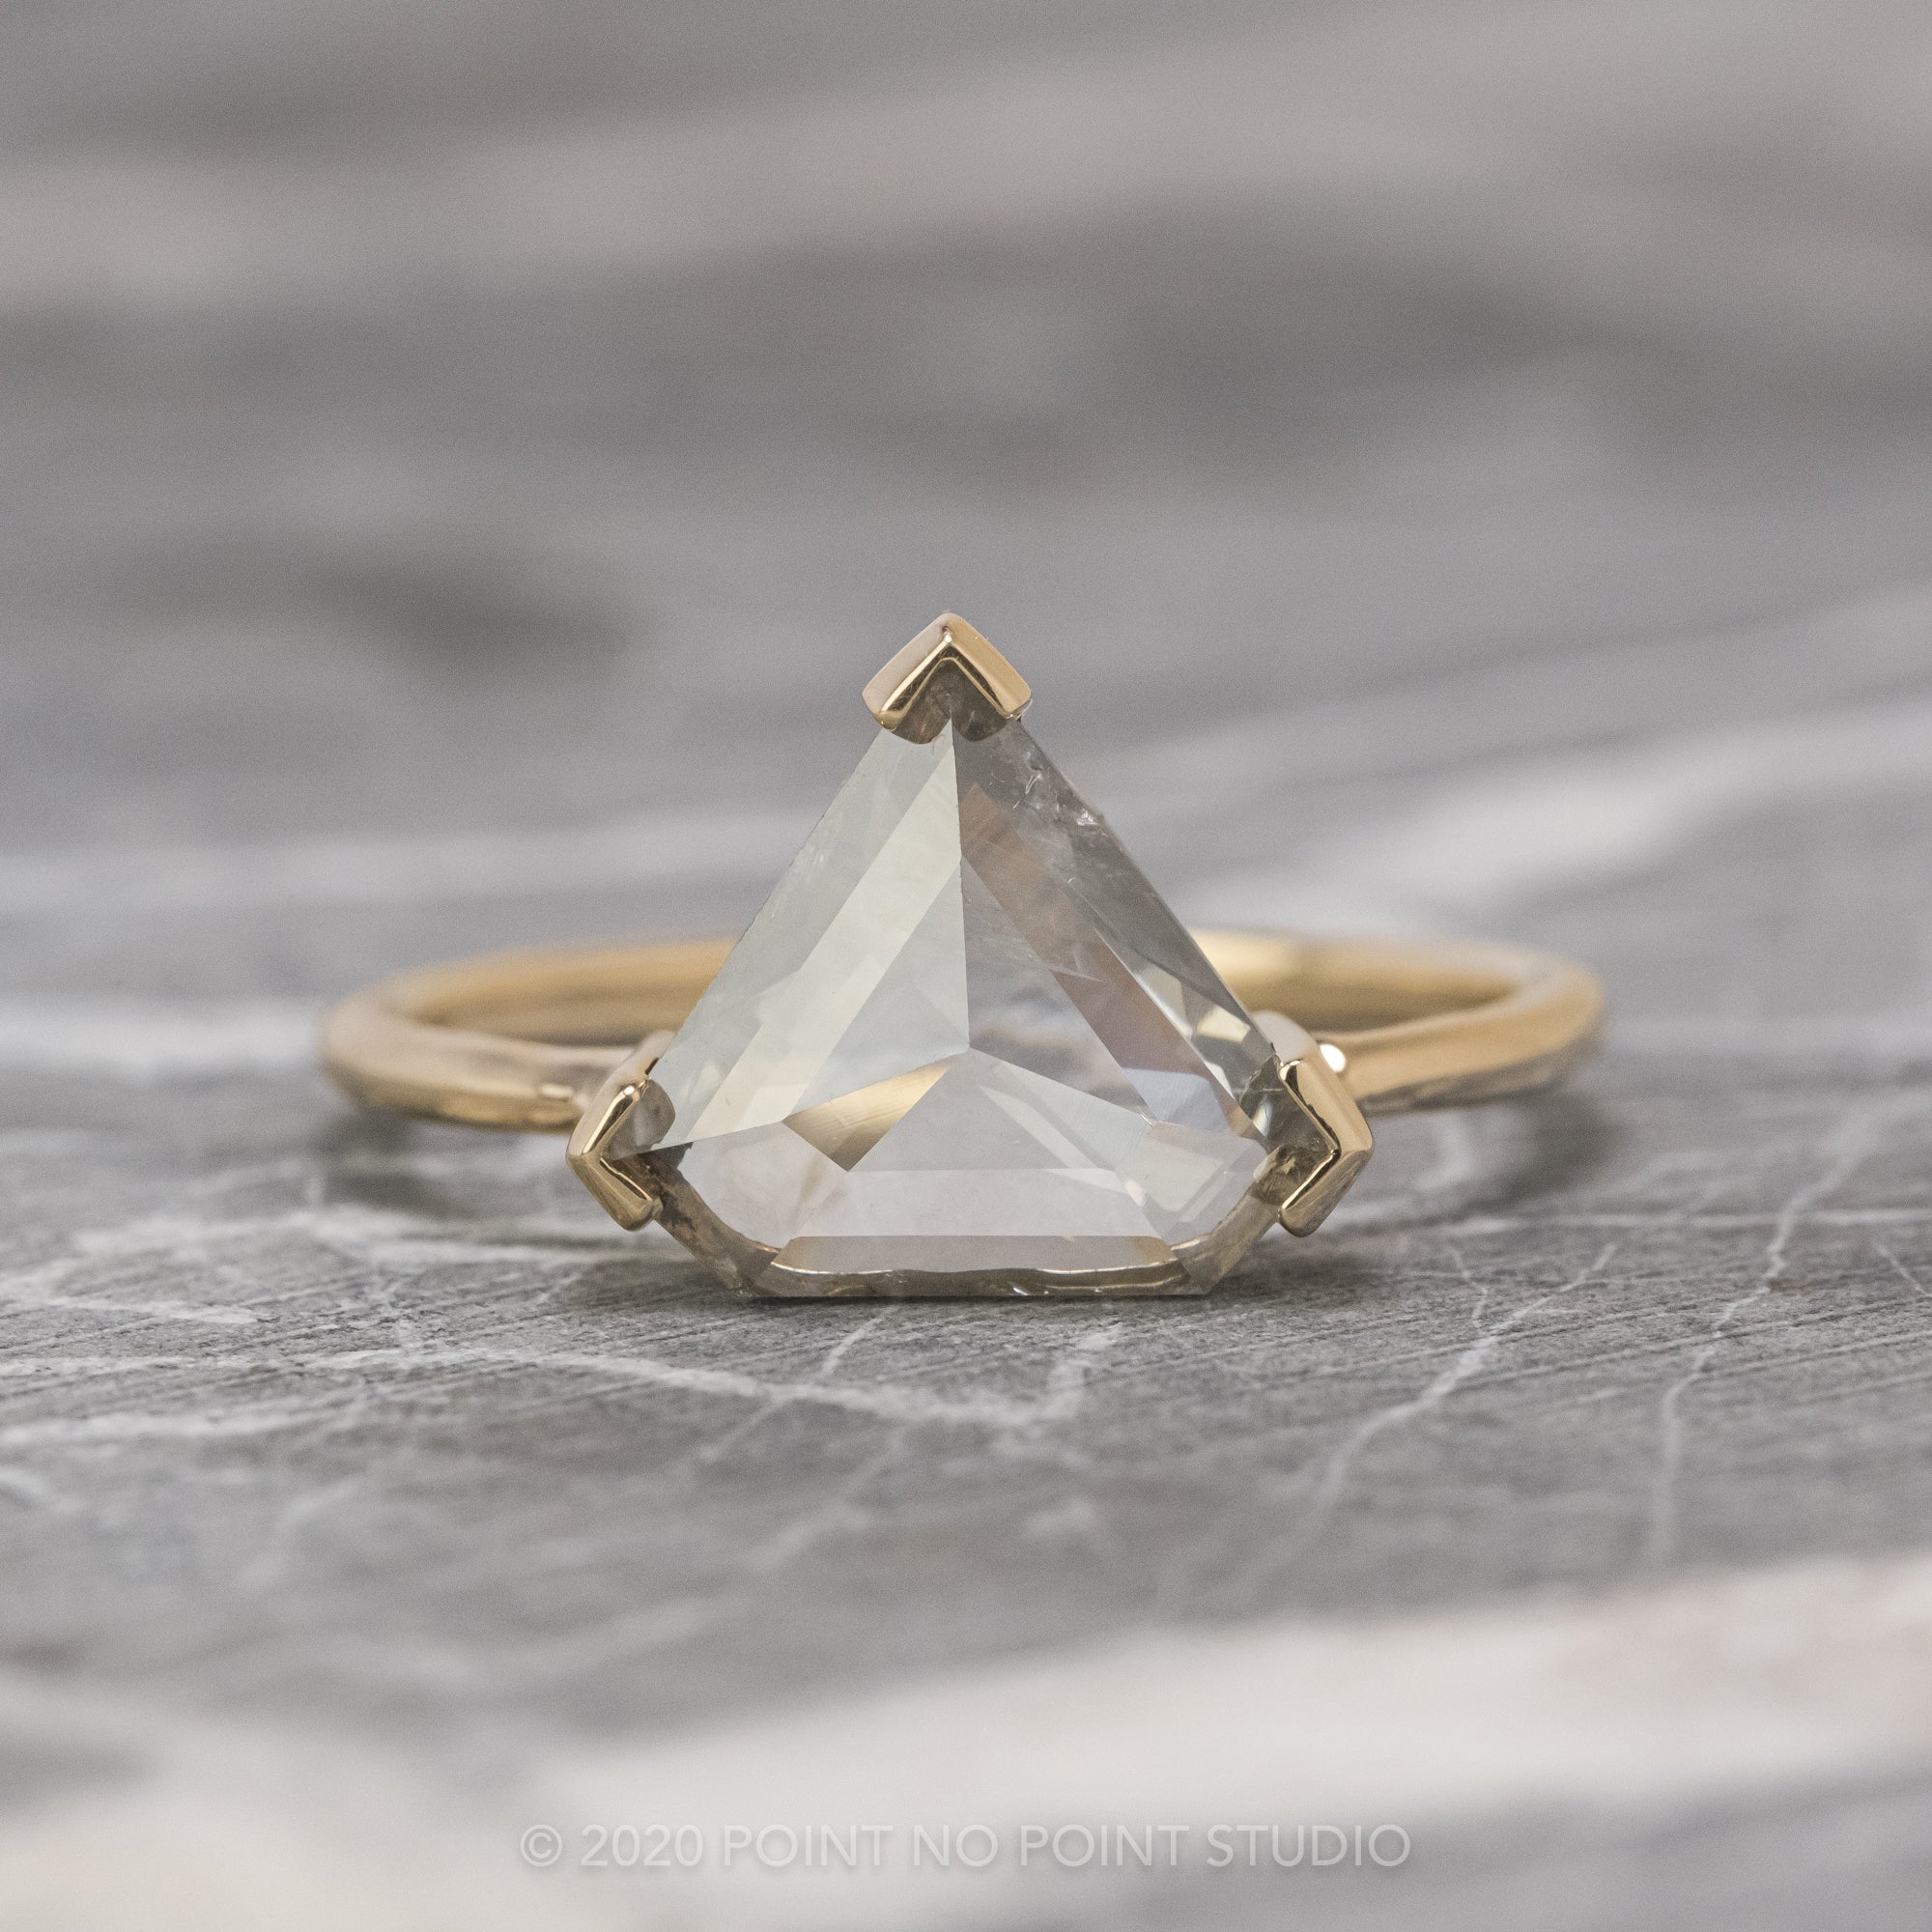 DIKLA - 3 Carat Oval Cut Diamond Engagement Ring with Shield Cut Side  Diamonds,18k Gold - Kosher Diamonds